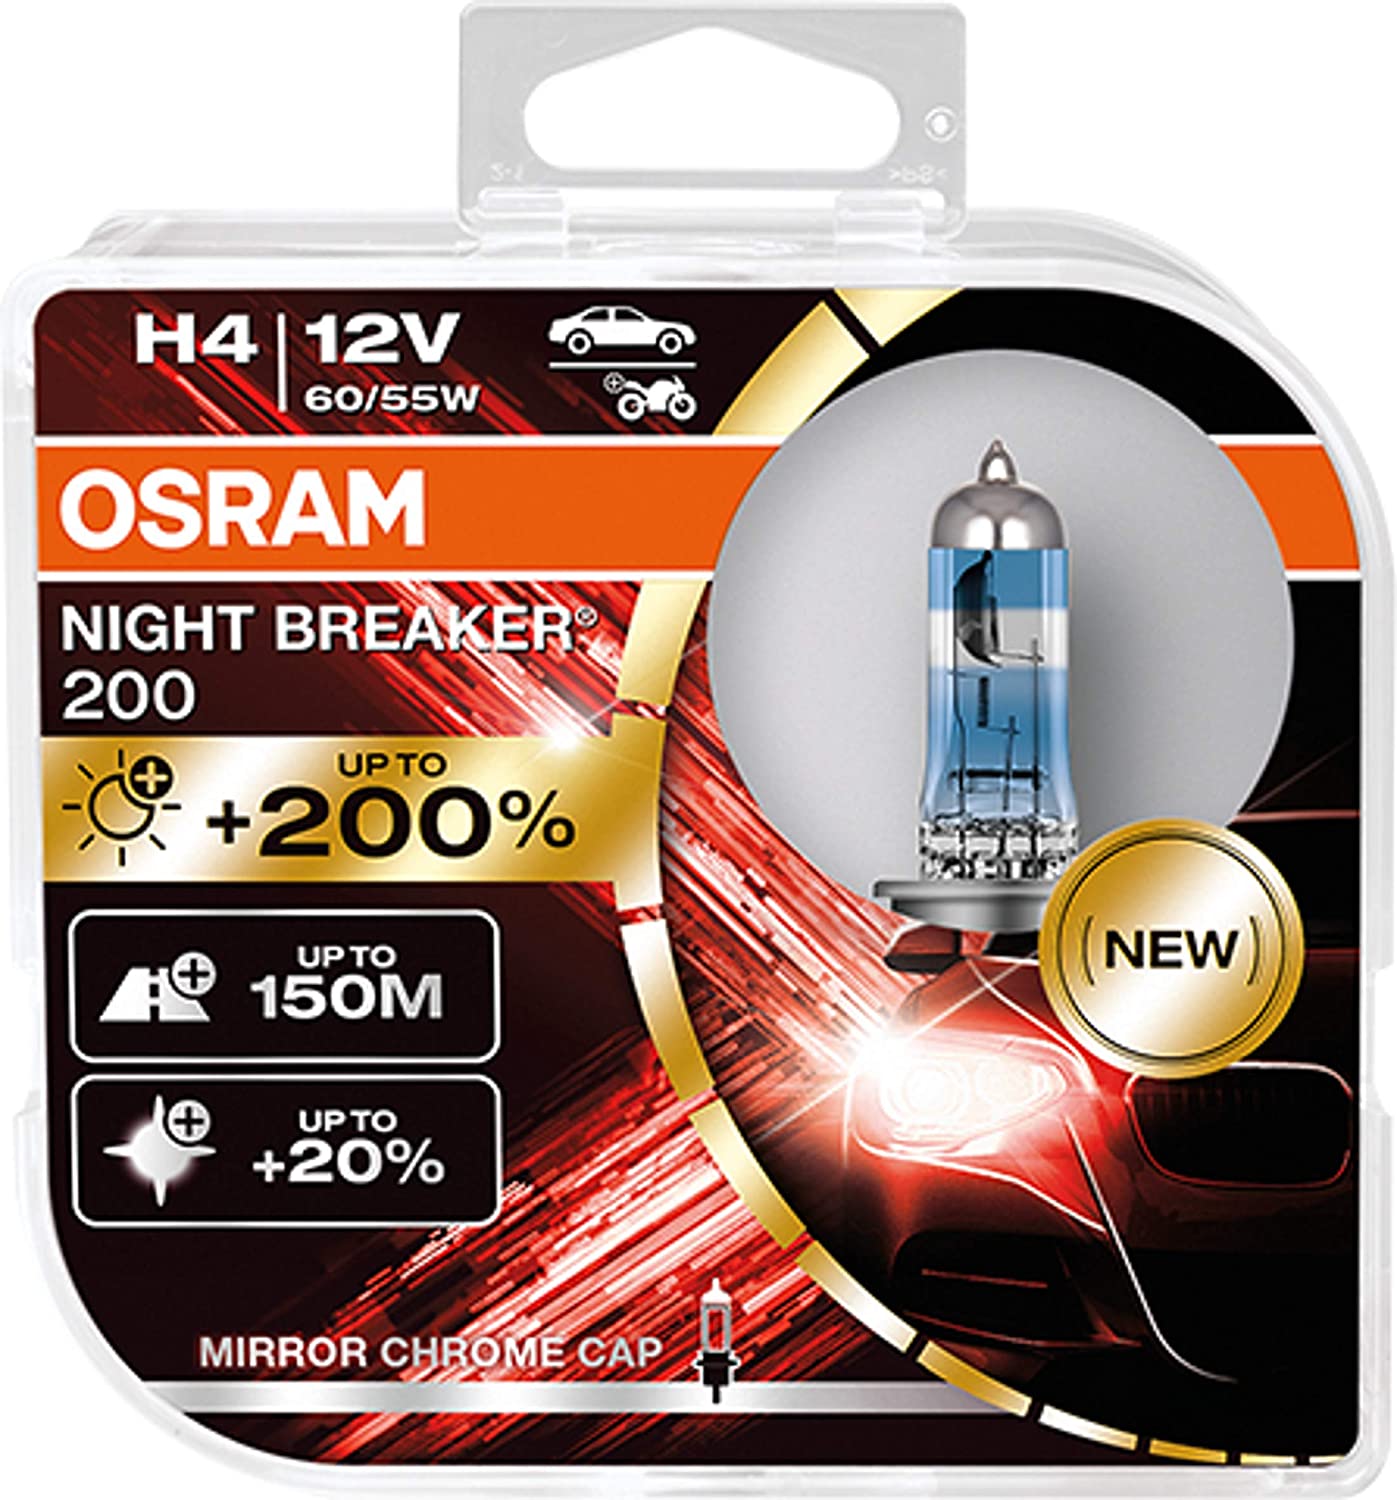 Osram LED Vs Standard Halogen On Reflector Lens Vehicle H7 Headlight Bulb  Comparison ( Xenon HID ) 